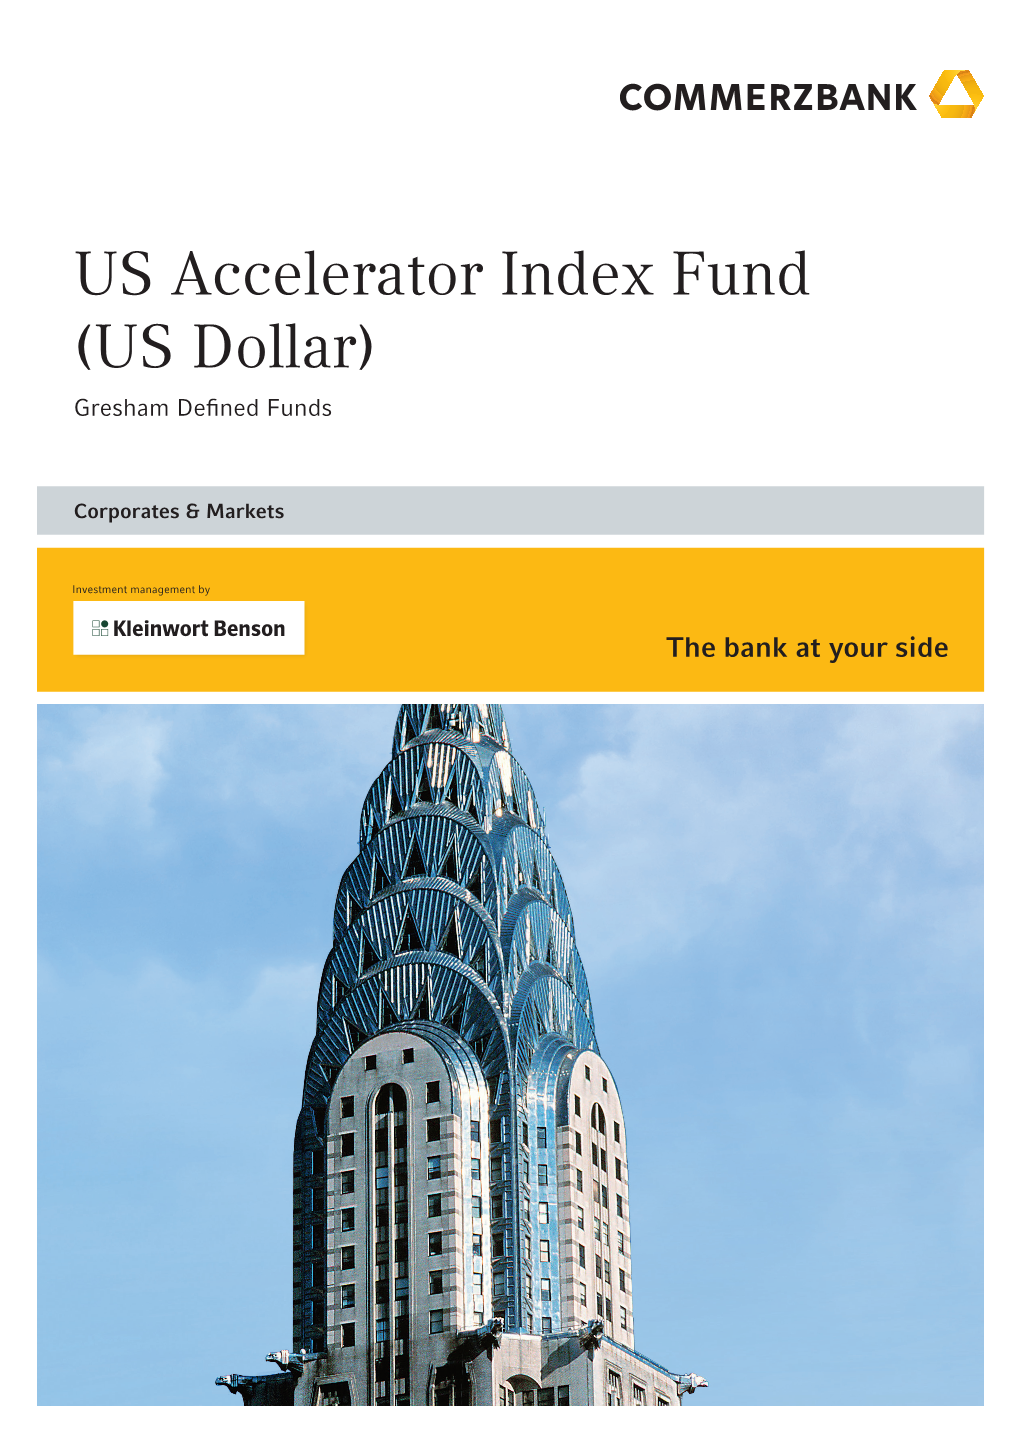 US Accelerator Index Fund (US Dollar) Gresham Defined Funds